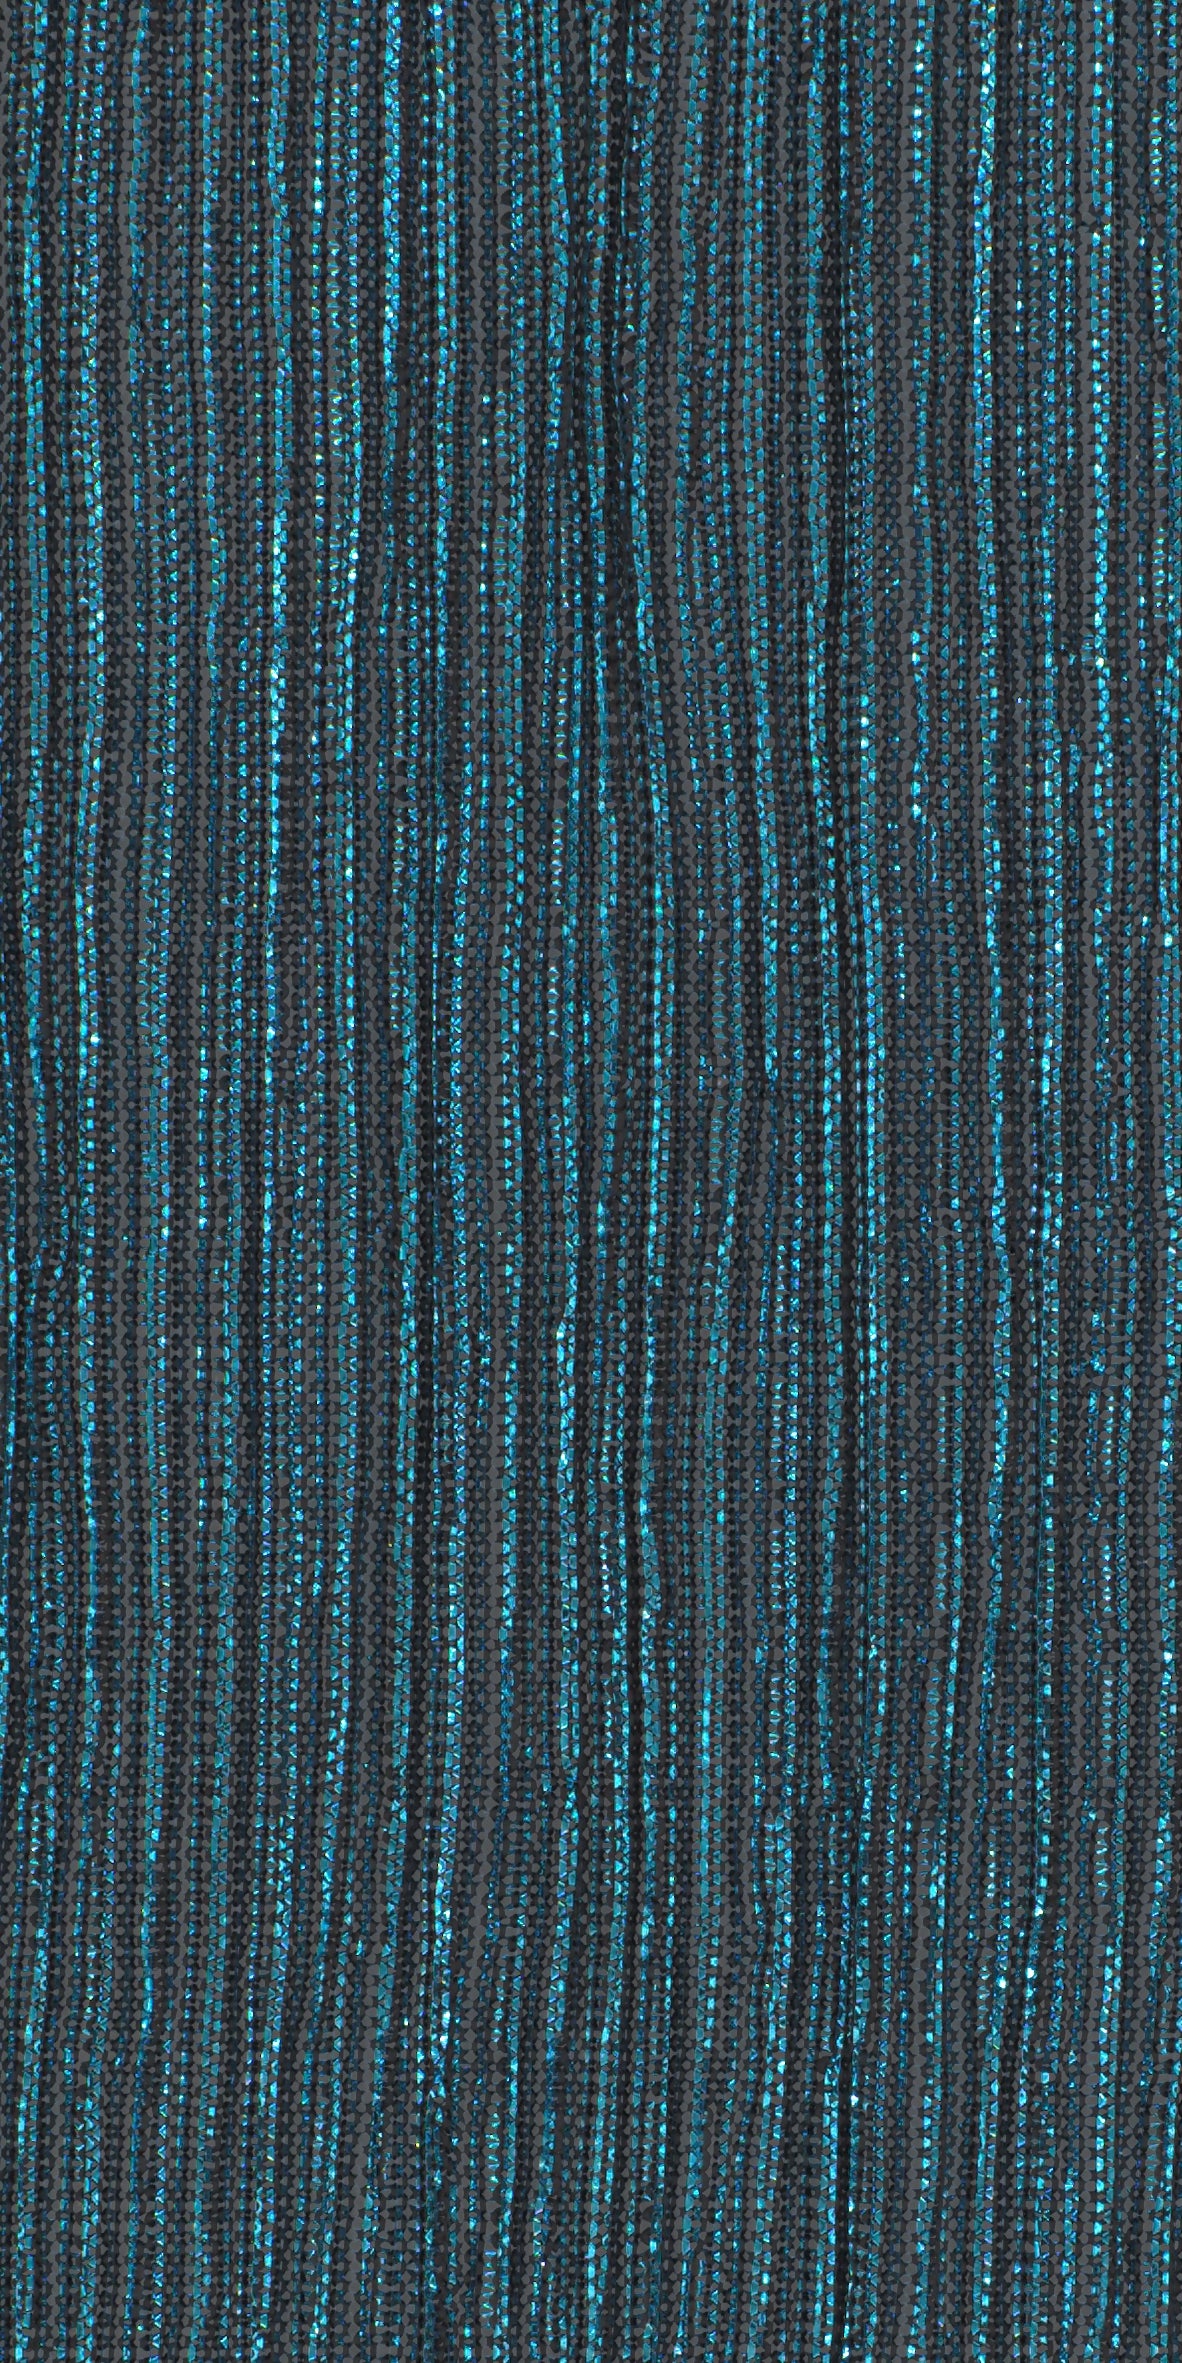 12006-03 Dark Turqoise Black Metallic Pleat Plain Dyed Blend 126g/yd 56" black blend blue knit metallic plain dyed pleat ppl new Metallic, Pleat - knit fabric - woven fabric - fabric company - fabric wholesale - fabric b2b - fabric factory - high quality fabric - hong kong fabric - fabric hk - acetate fabric - cotton fabric - linen fabric - metallic fabric - nylon fabric - polyester fabric - spandex fabric - chun wing hing - cwh hk - fabric worldwide ship - 針織布 - 梳織布 - 布料公司- 布料批發 - 香港布料 - 秦榮興